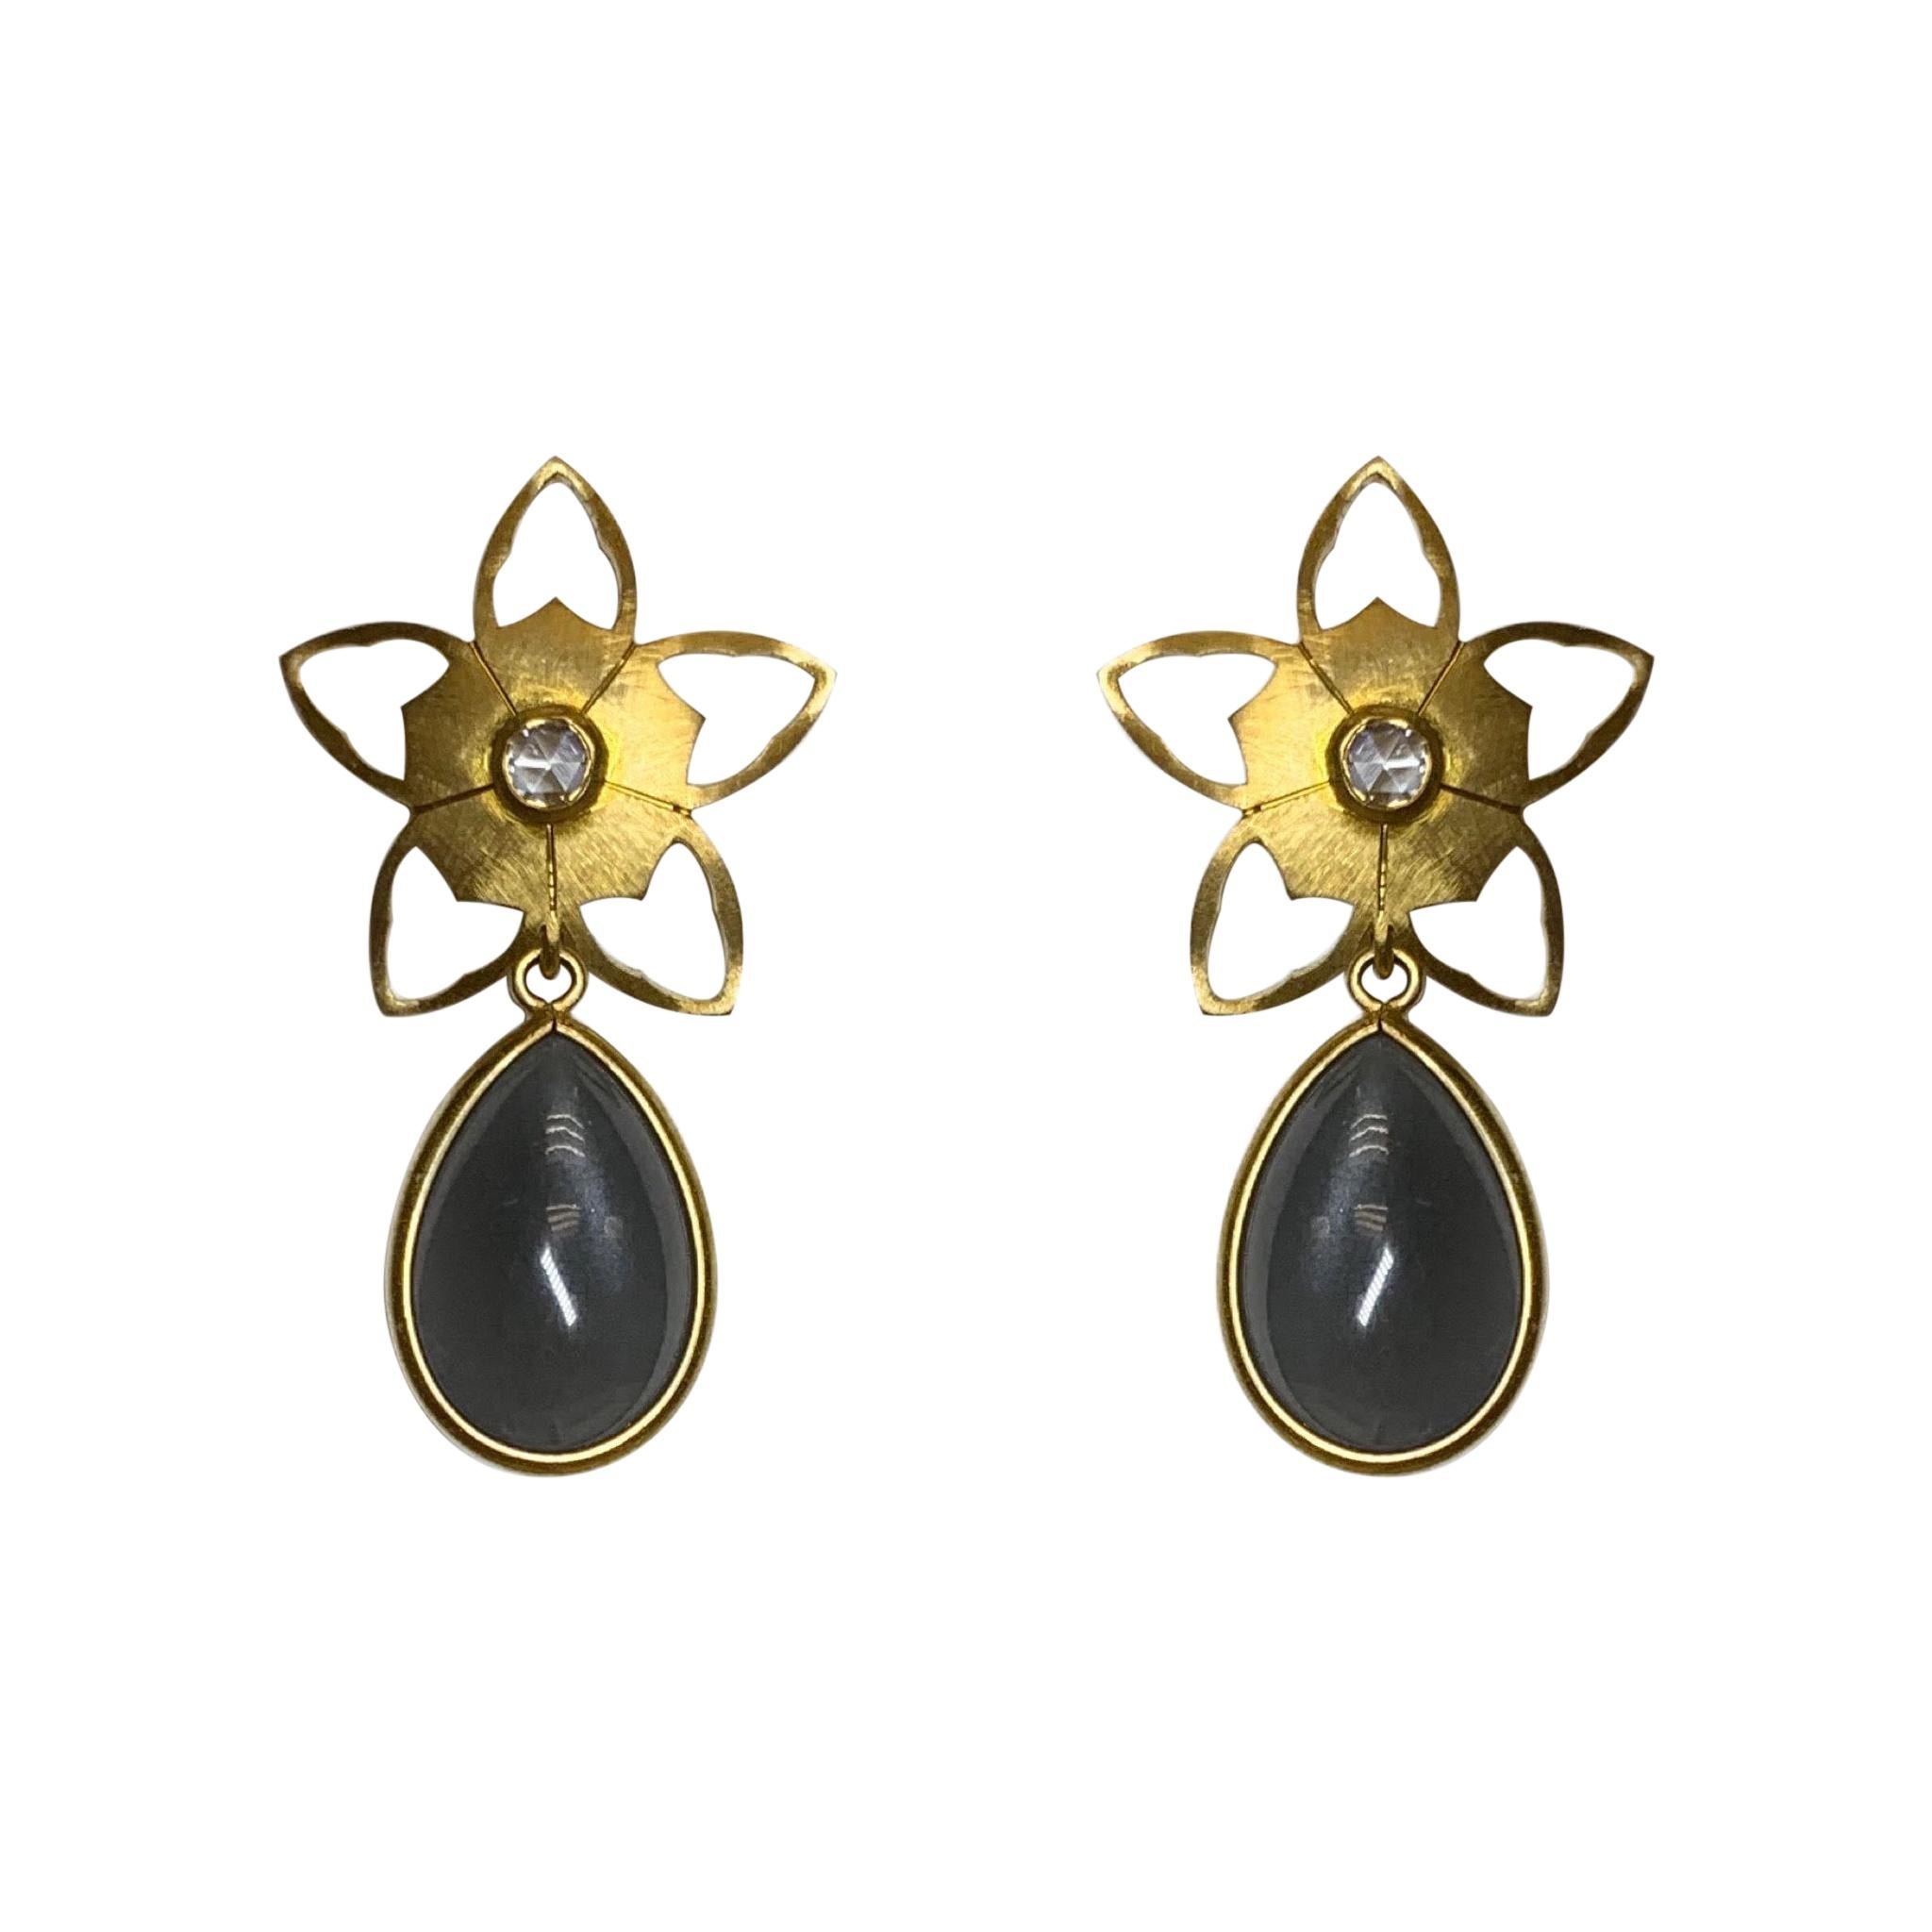 5 Petal Diamond Flower with Detachable Earrings in 18 Karat Gold, A2 by Arunashi For Sale